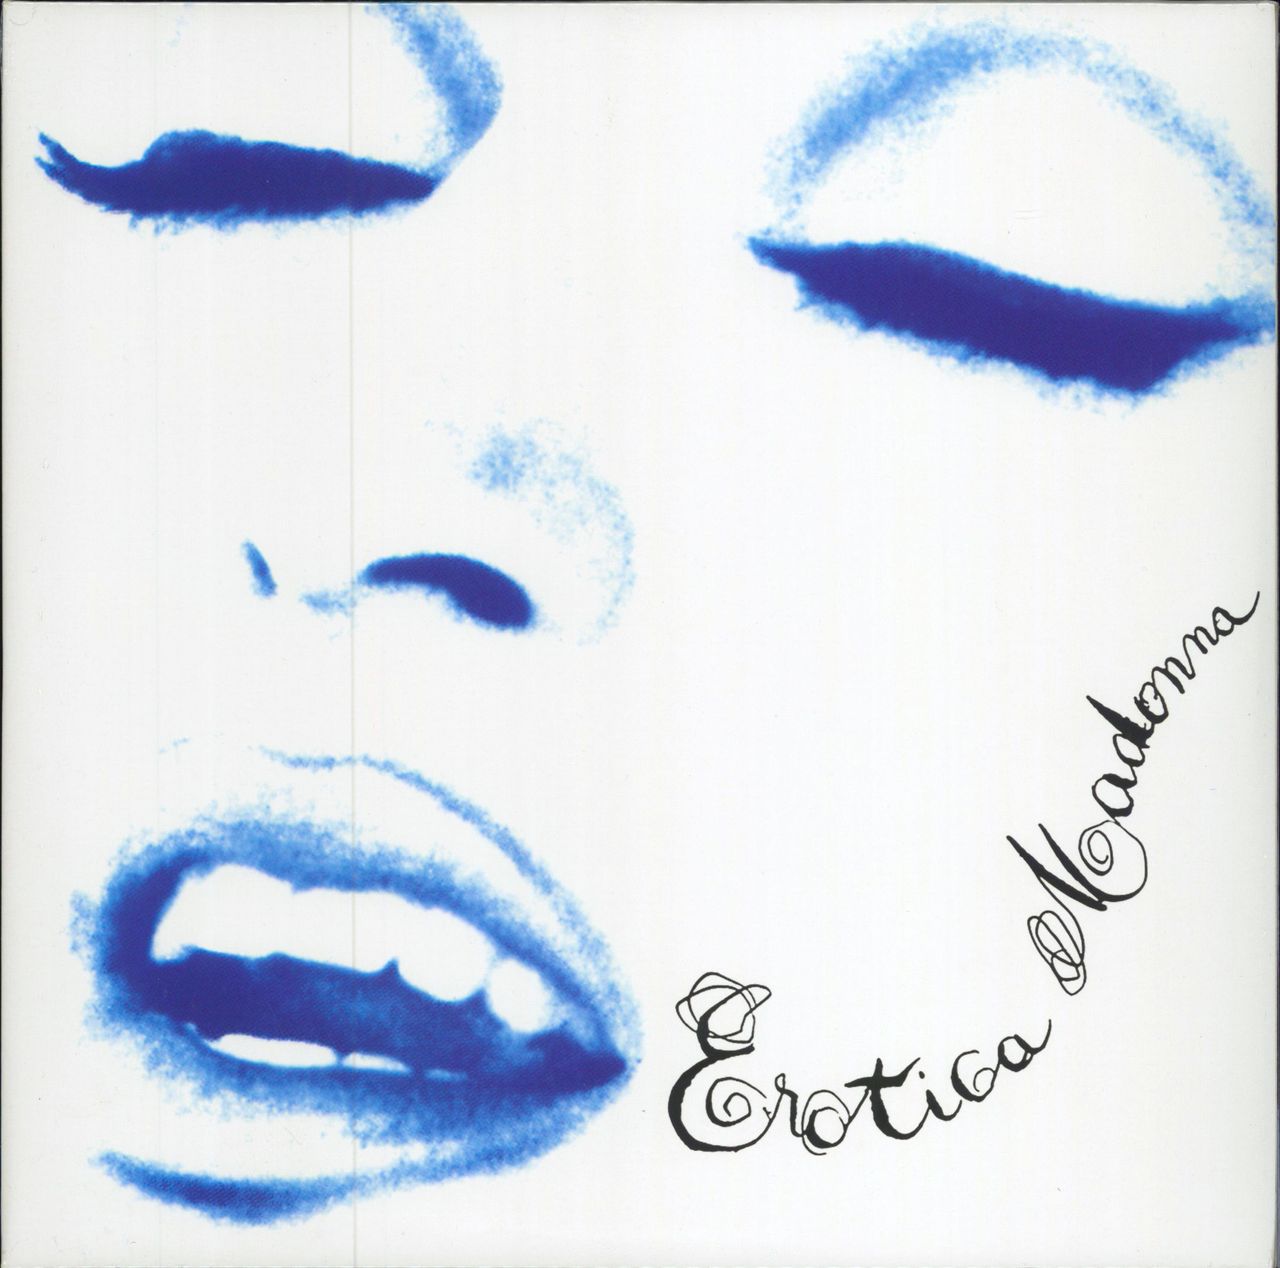 Madonna Erotica - White vinyl - Sealed UK 2-LP vinyl record set (Double LP Album) 8122-79735-6